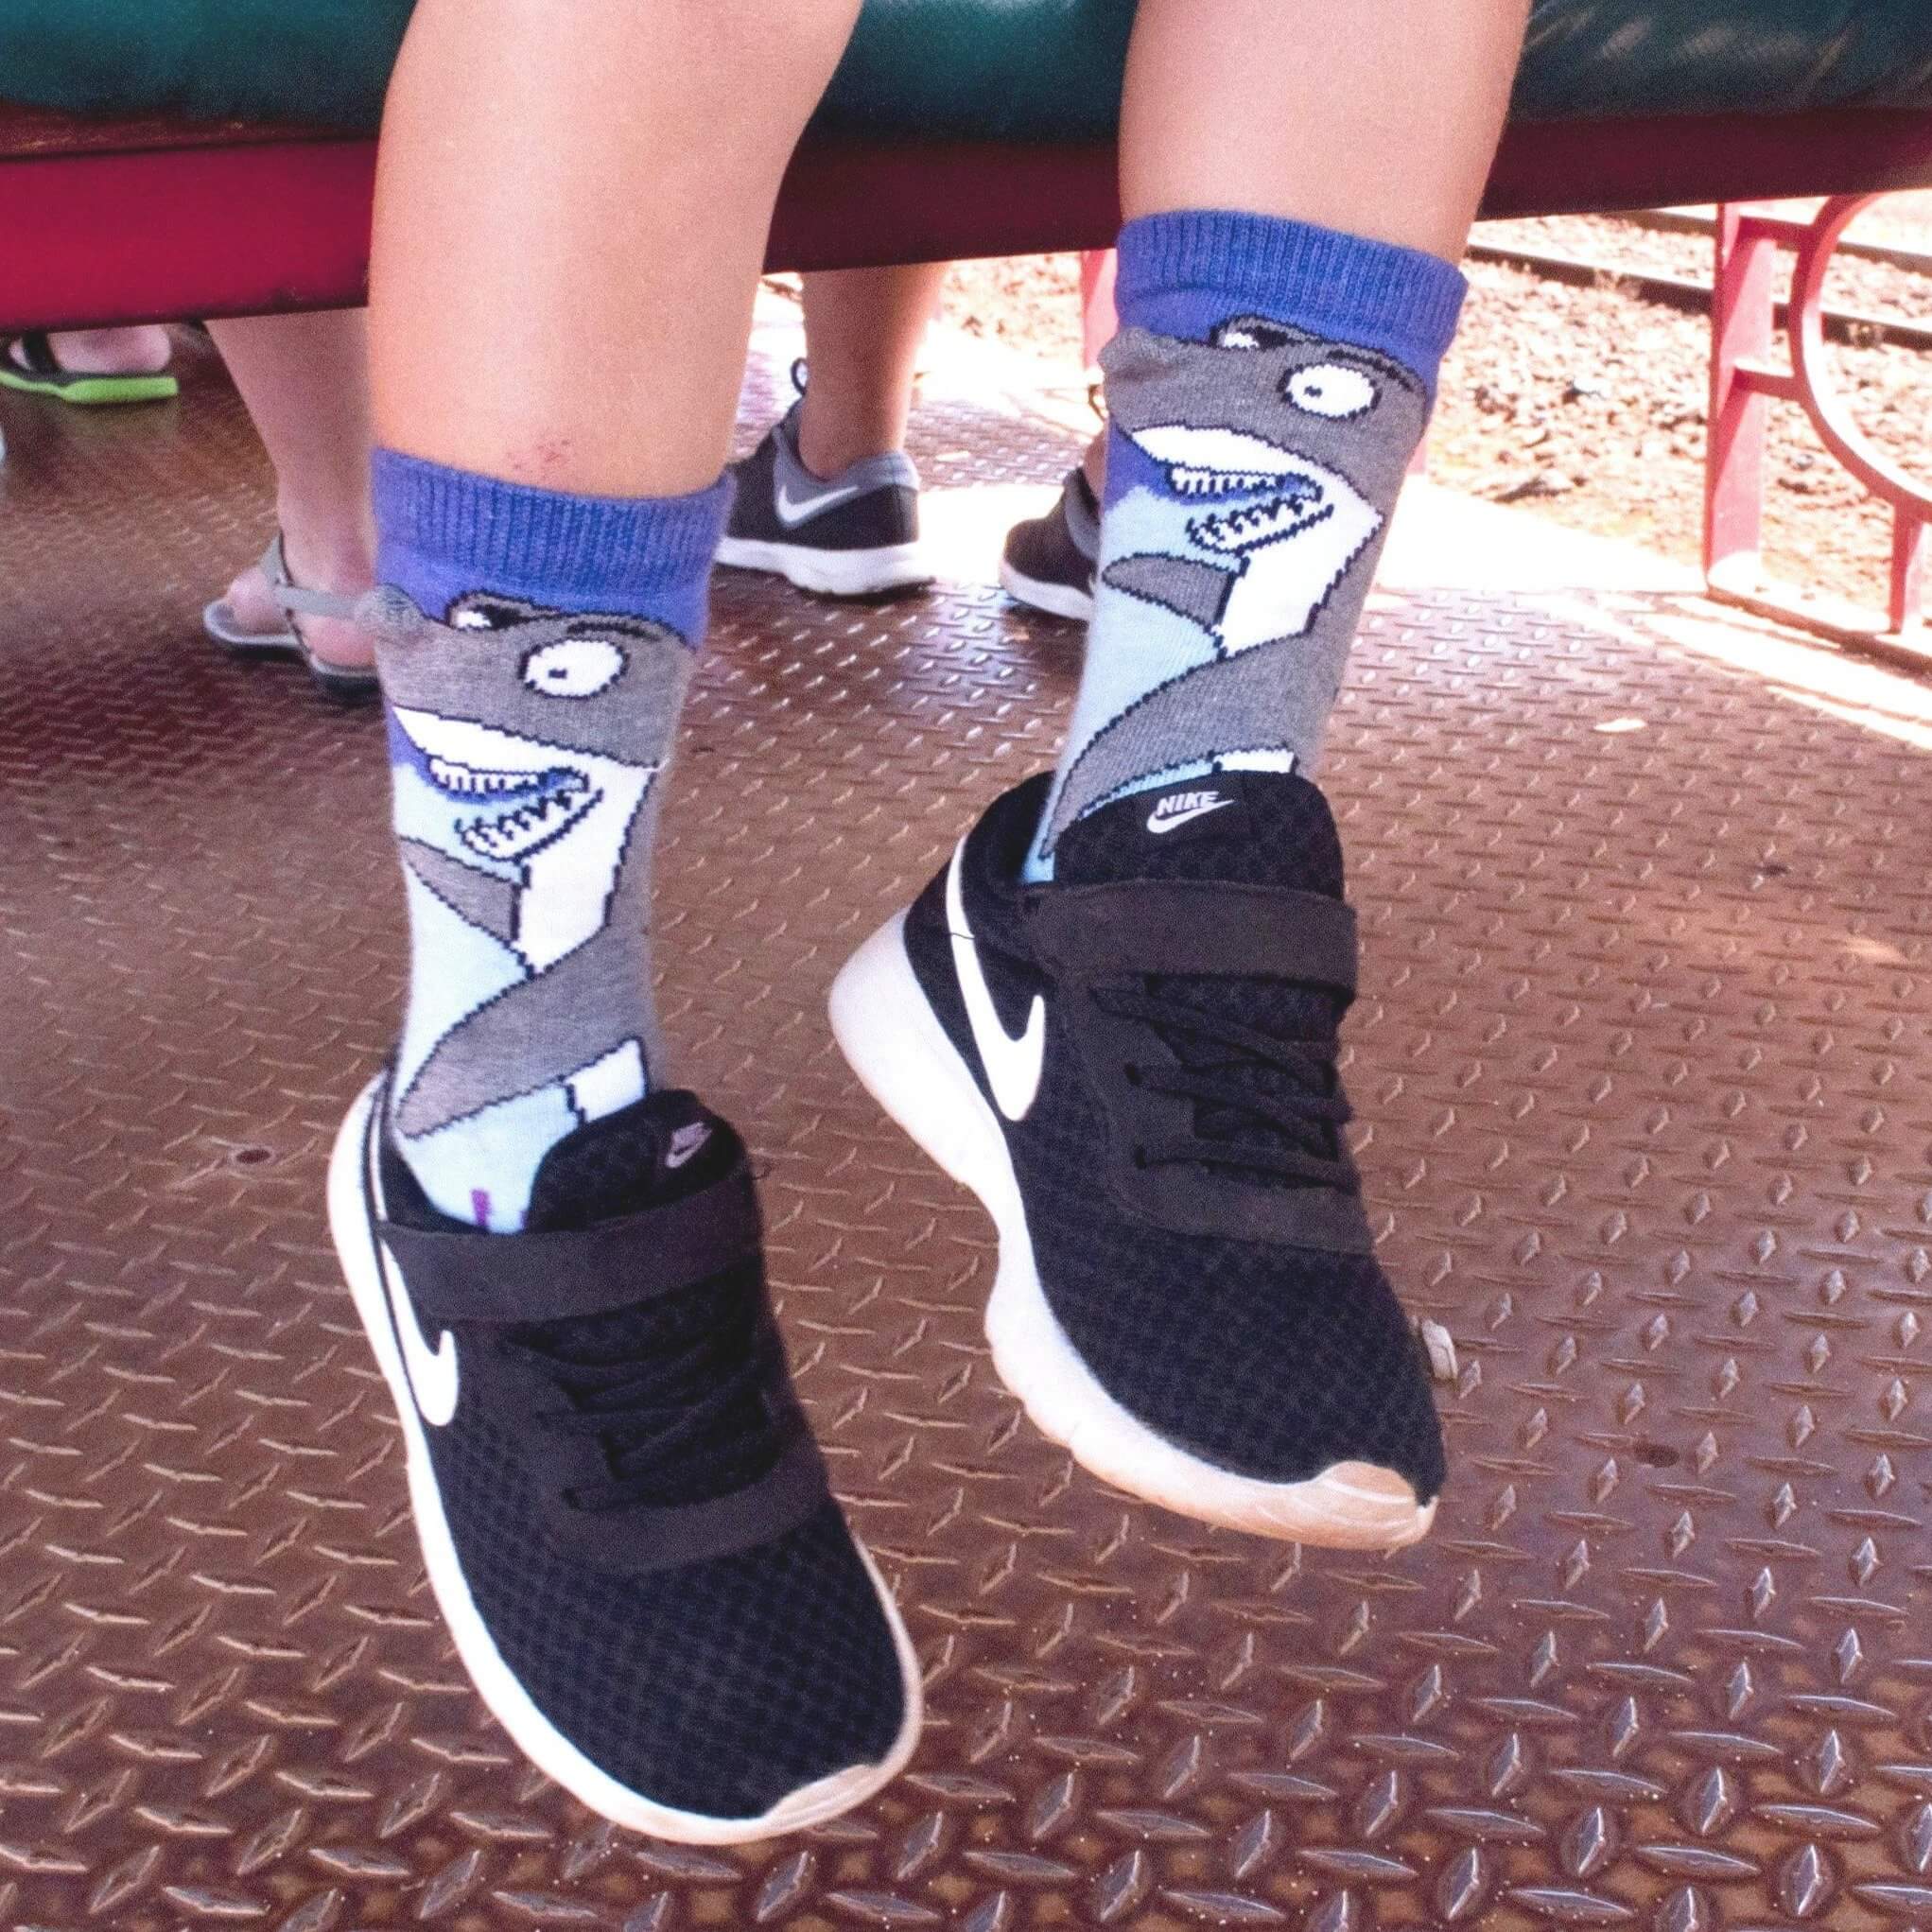 Bob the Shark Socks (Ages 3-7) from the Sock Panda